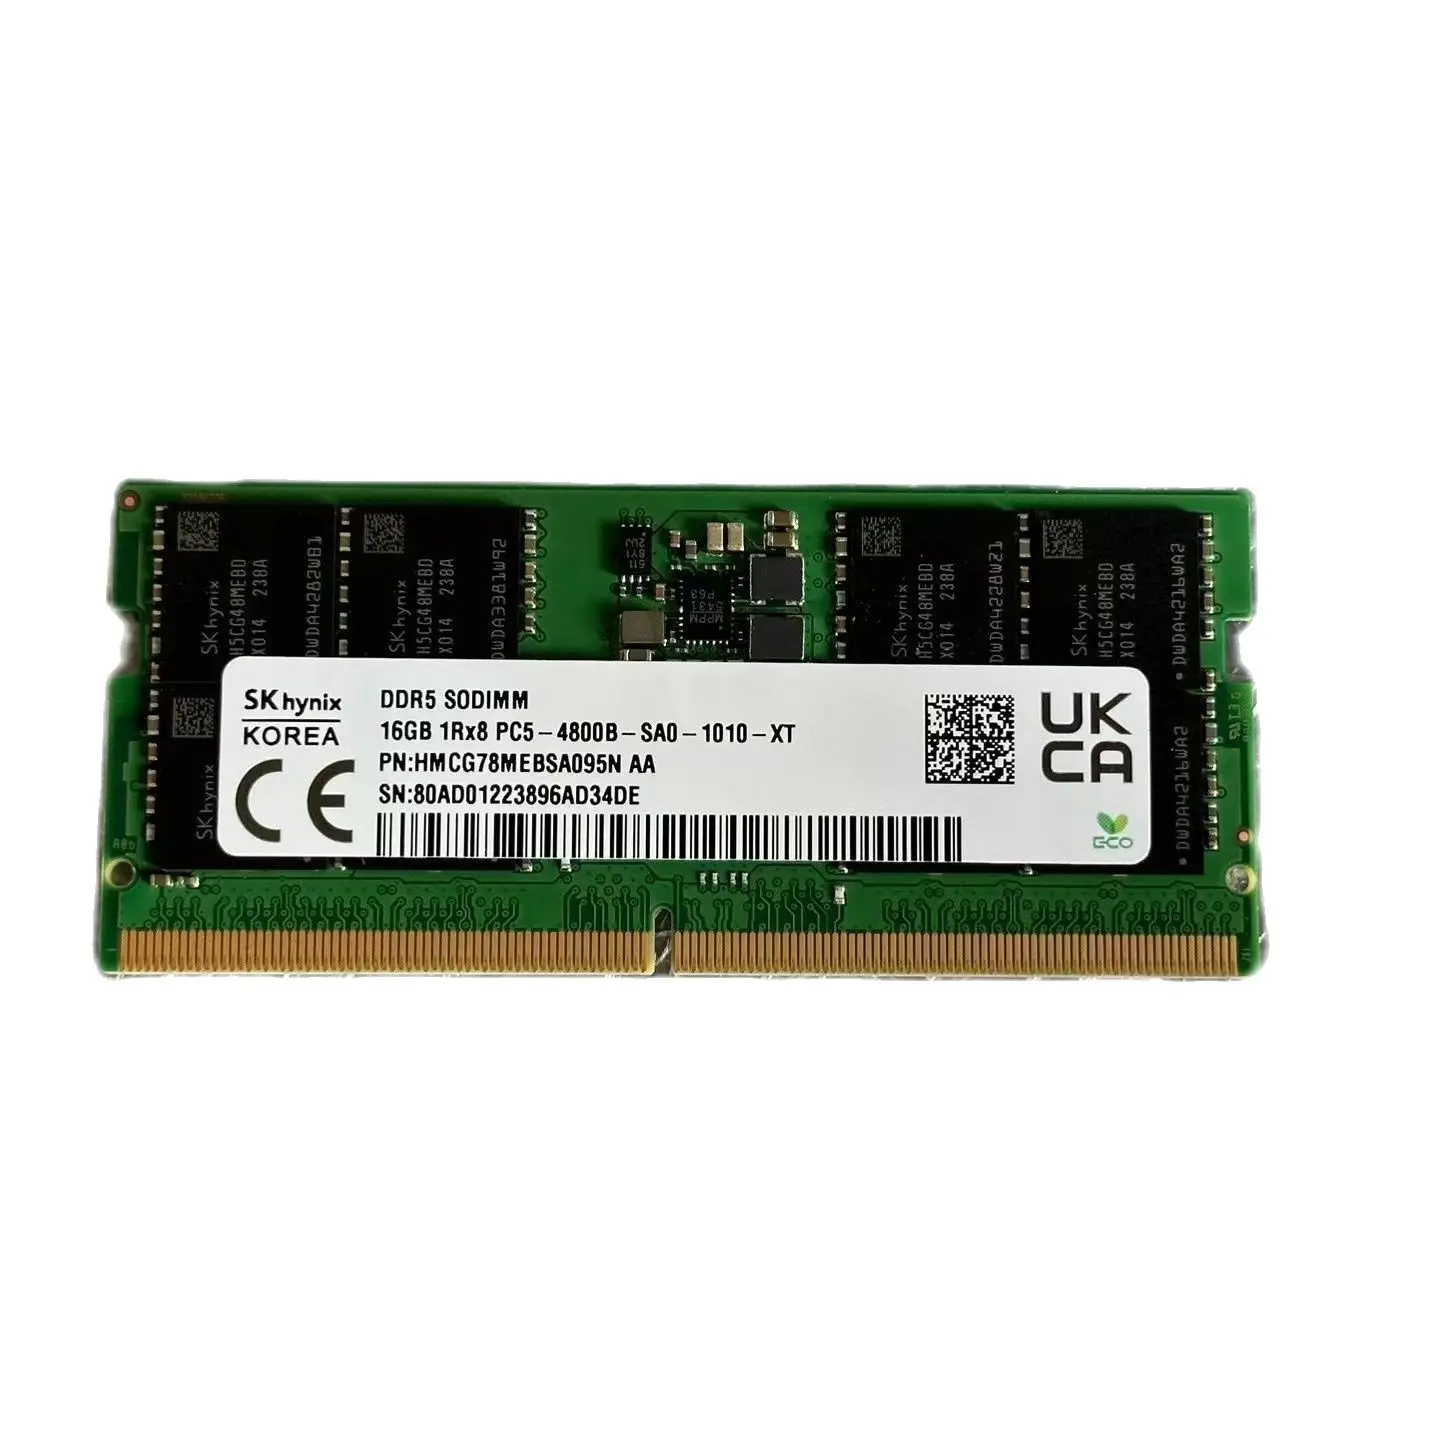 

SK hynix DDR5 SODIMM 16GB 1Rx16 PC5 - 4800/5600 - SC0 Laptopk Memory Itx RAM Mini Host